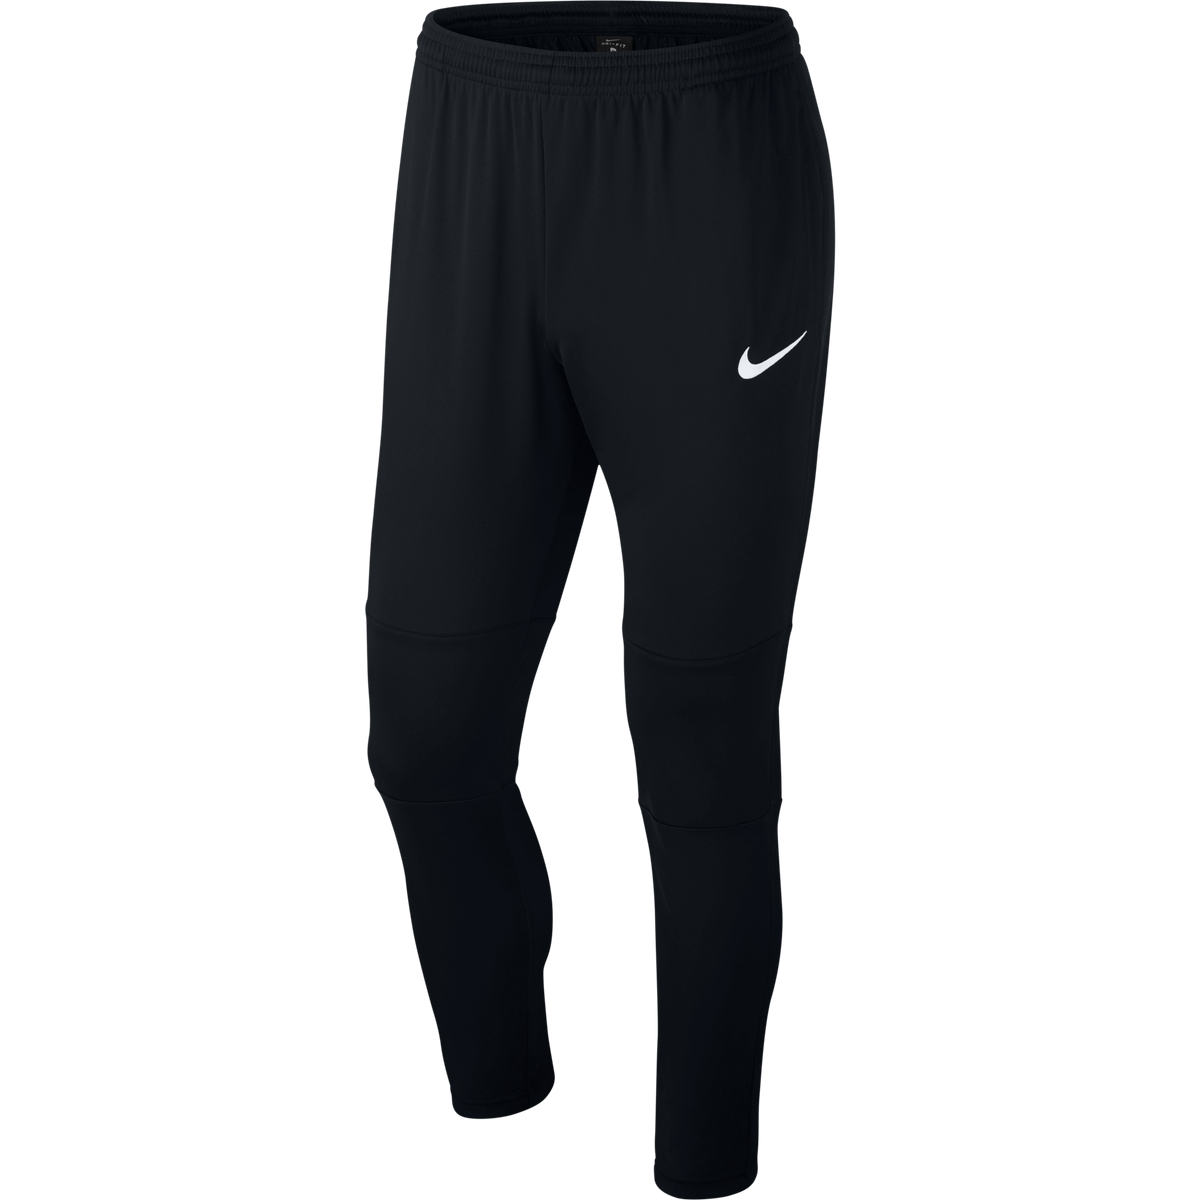 Nottingham FA - Nike Park 20 Knit pant, Adults, Black. (BV6877/010) - Fanatics Supplies